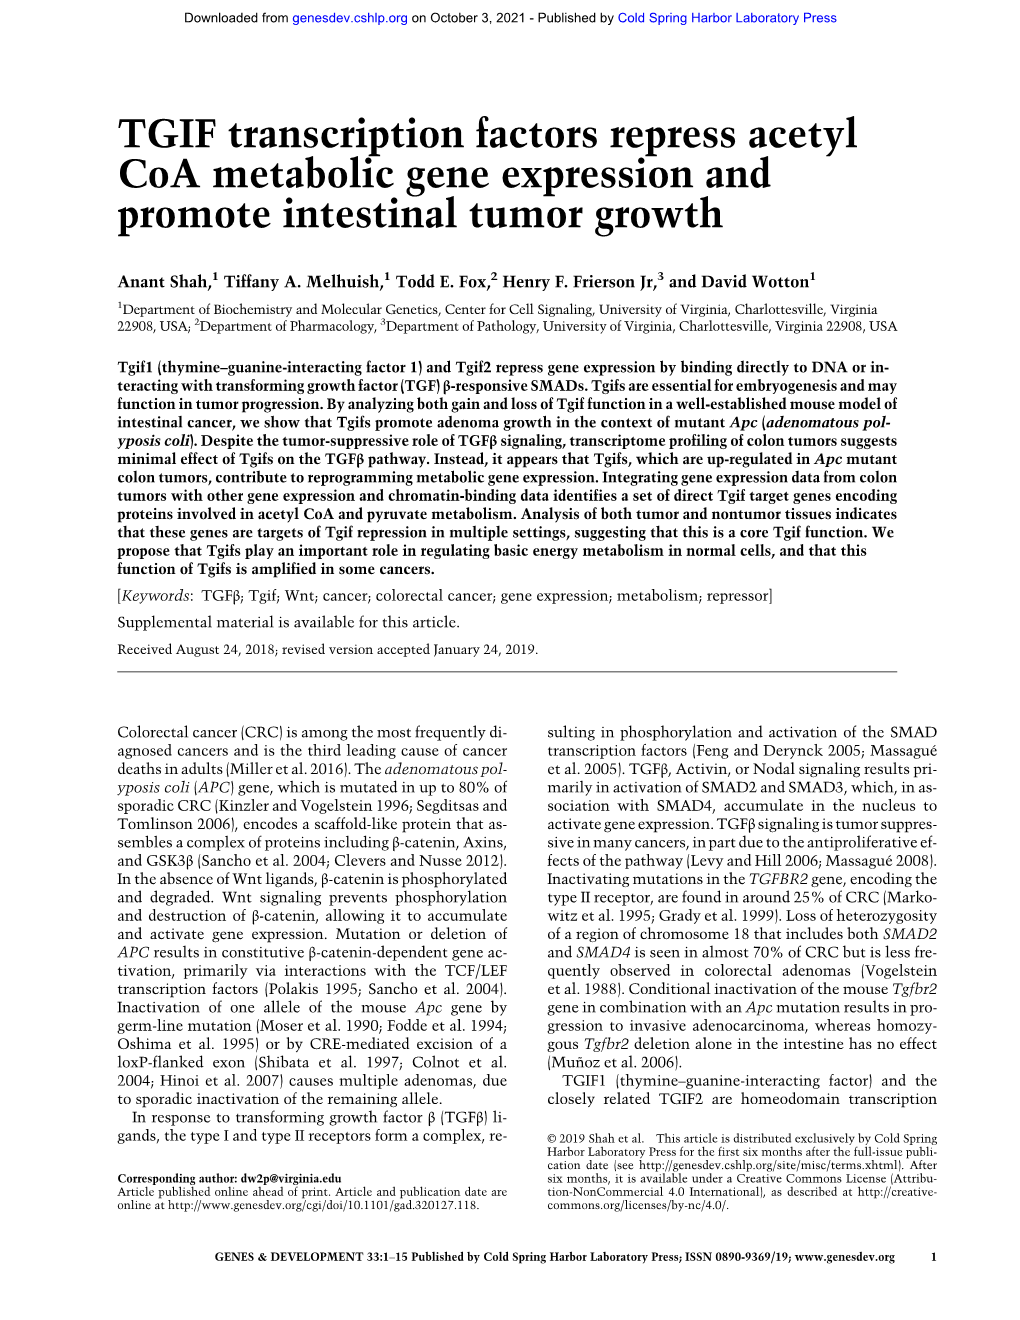 TGIF Transcription Factors Repress Acetyl Coa Metabolic Gene Expression and Promote Intestinal Tumor Growth